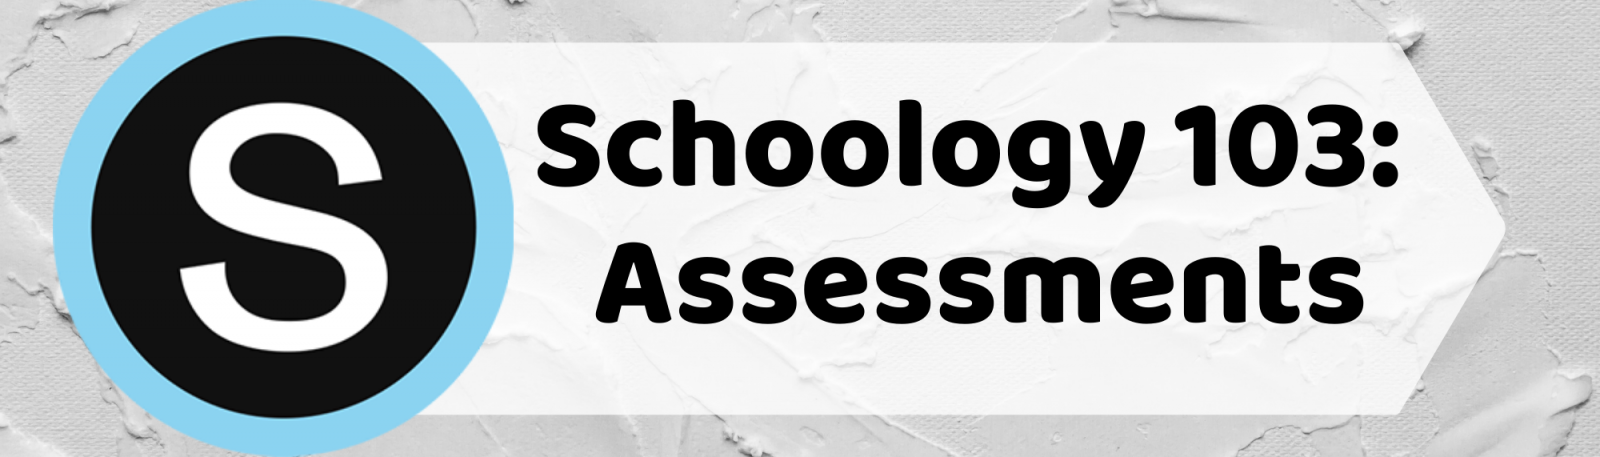 Schoology 103 | Assessments